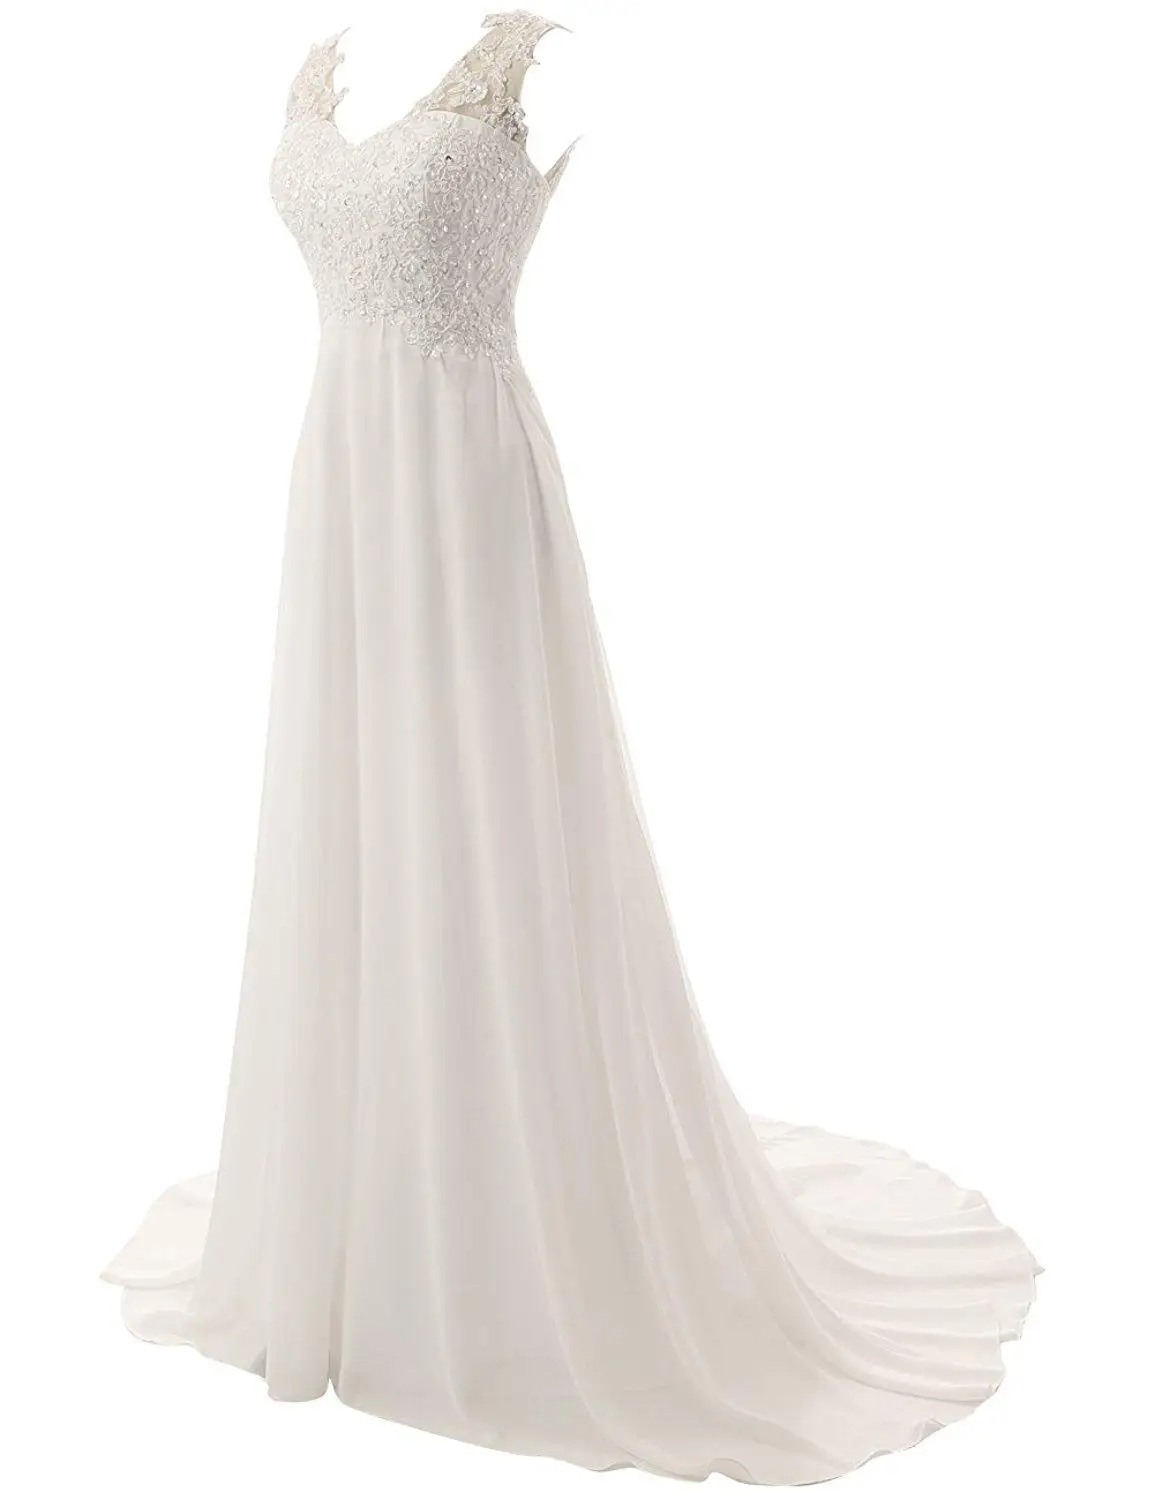 Beach Wedding Dresses Chiffon Lace Appliques Bridal Gown White/Lvory Backless Vestido De Noiva wedding dresses for women 3